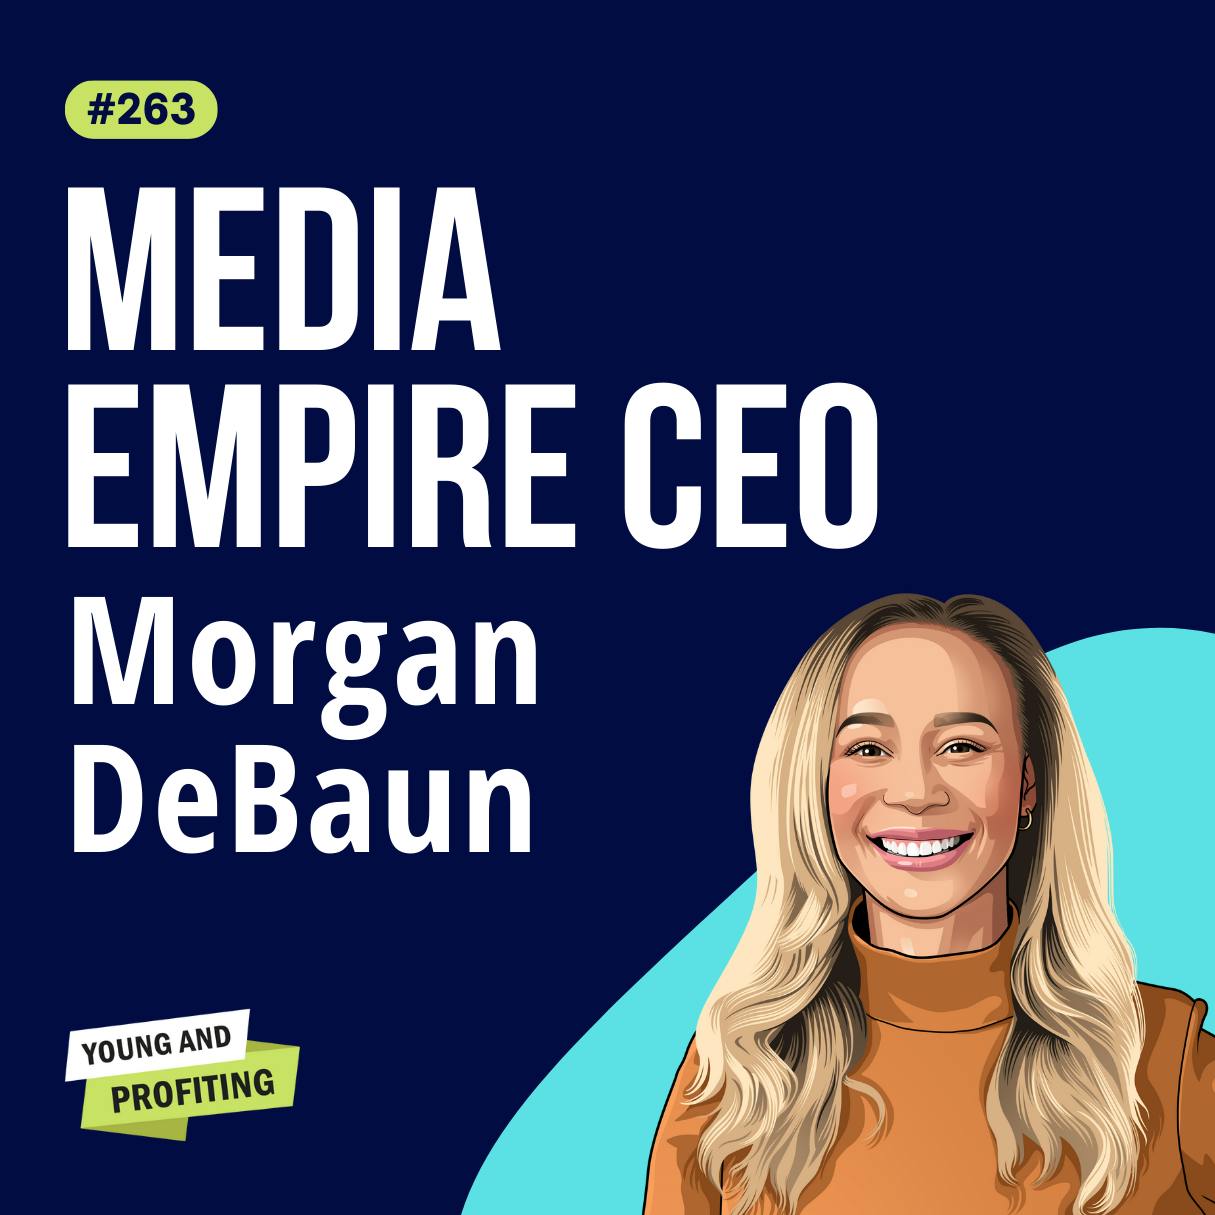 Morgan DeBaun: Your Startup Survival Kit, from VC Funding to Leadership | E263